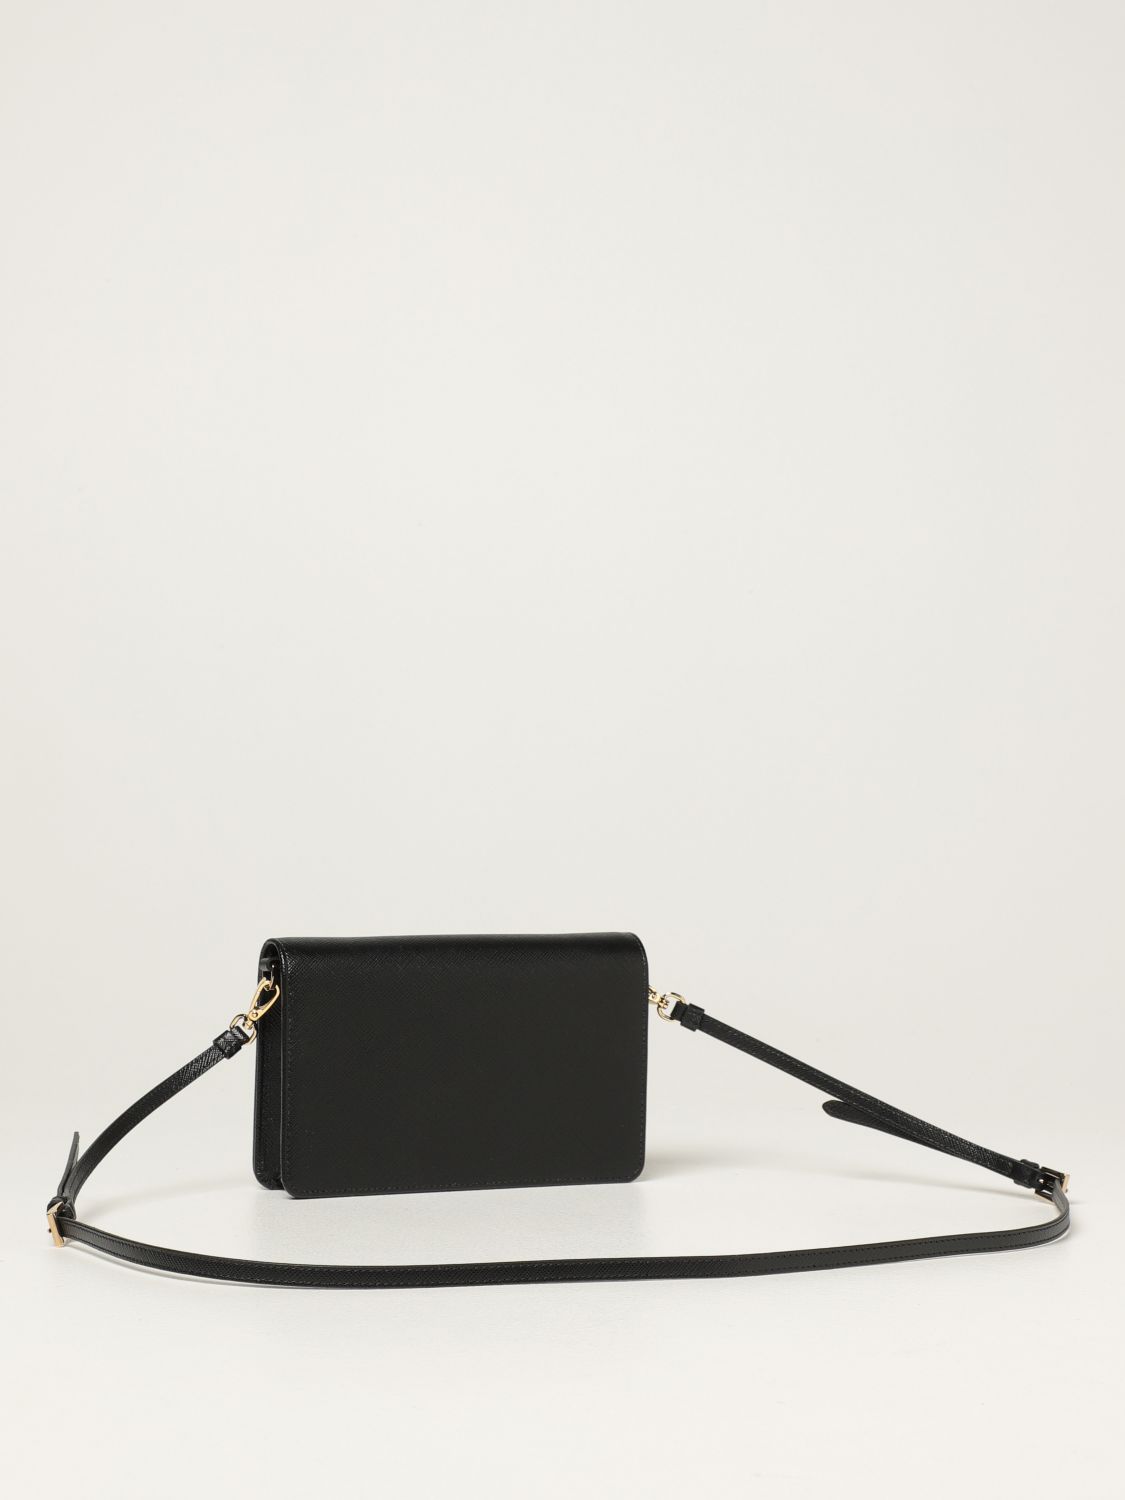 PRADA: Crossbody bag in saffiano leather - Black | Prada mini bag 1BP019  NZV online on 